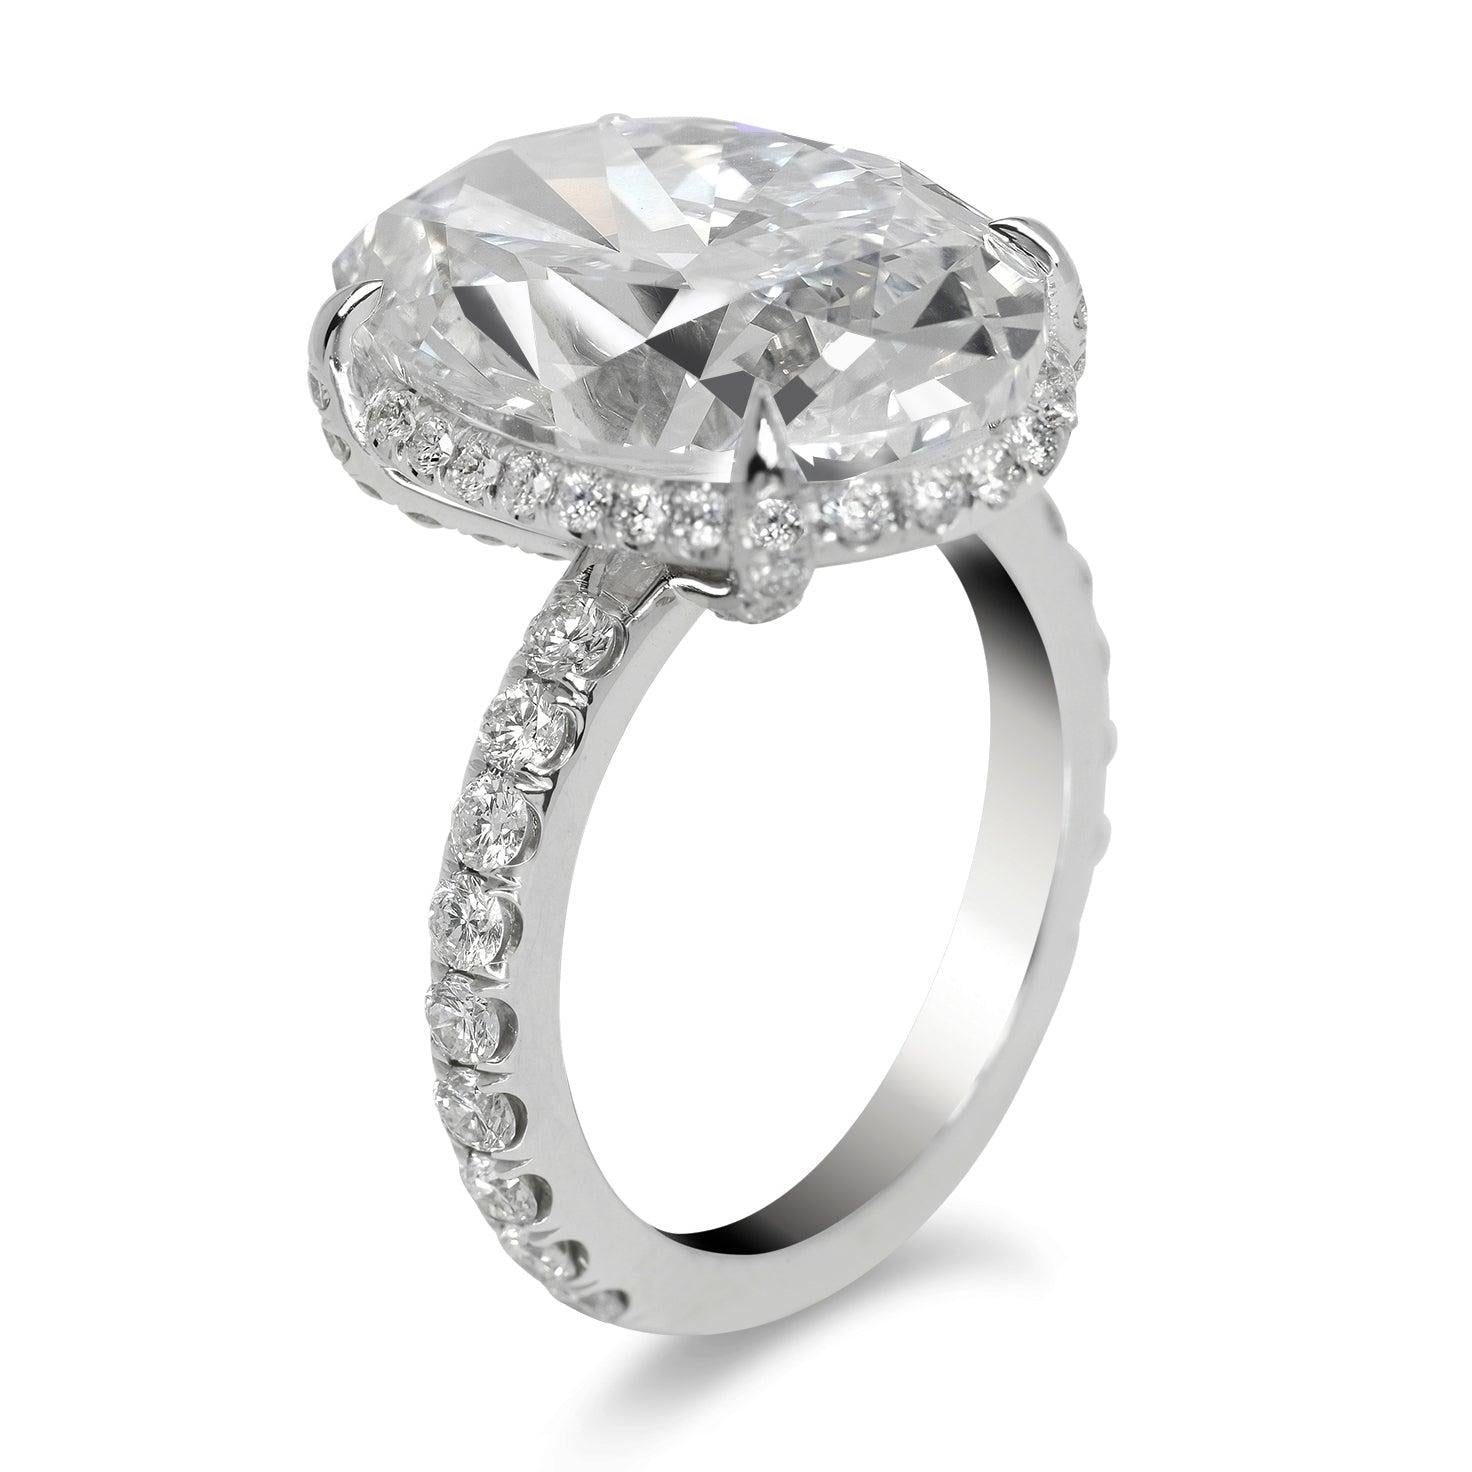 For Sale:  11 Carat Oval Cut Diamond Engagement Ring Platinum GIA Certified D VVS2  3